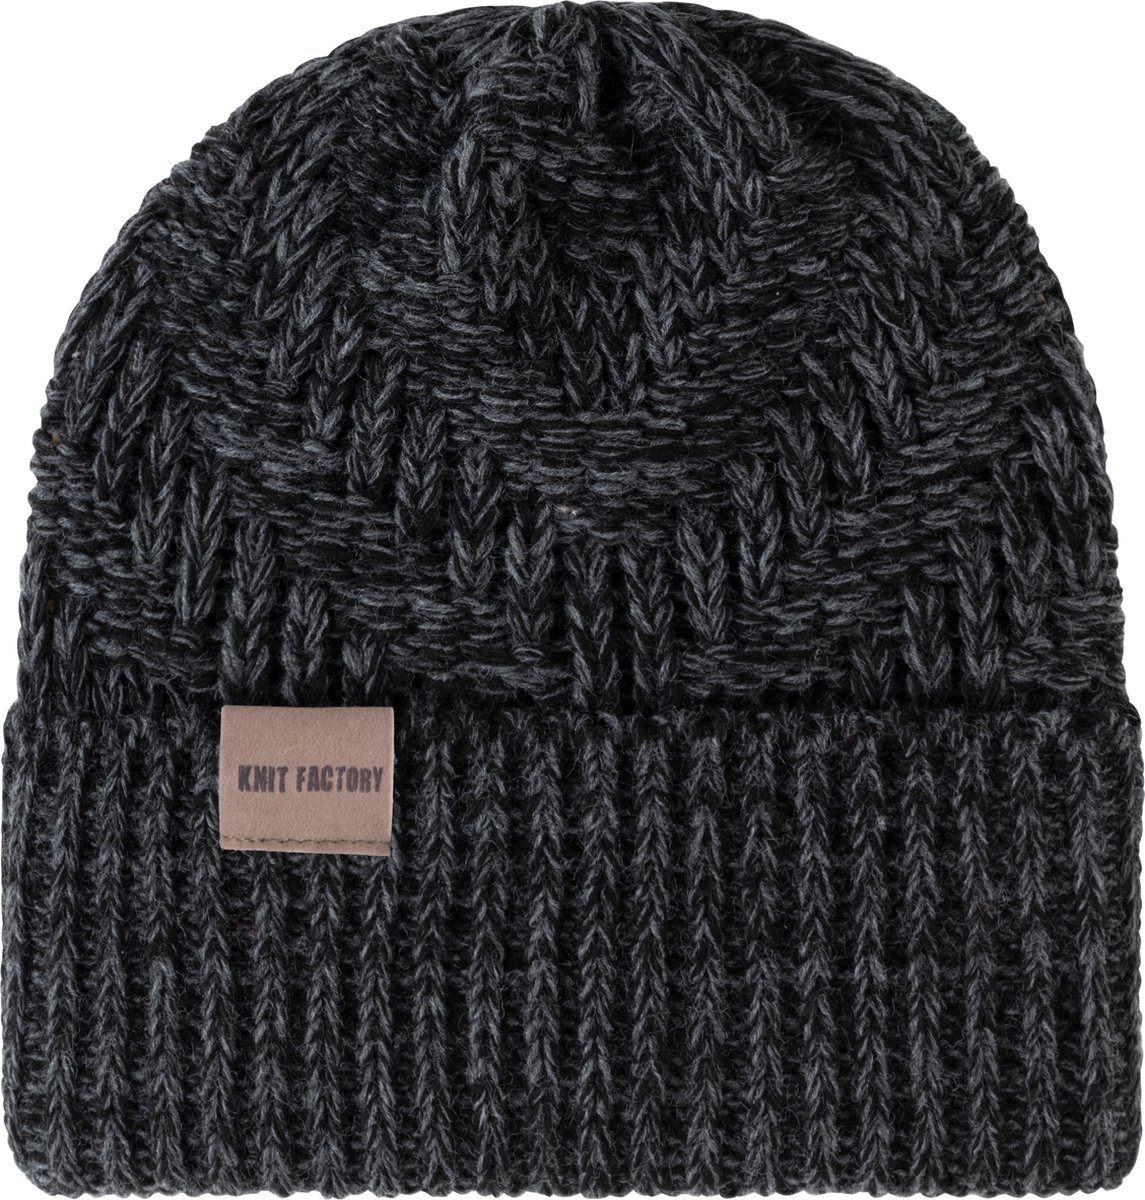 Knit Factory Sally Gebreide Muts Heren & Dames - Beanie hat - Zwart/Antraciet - Grofgebreid - Warme grijs gemeleerde Wintermuts - Unisex - One Size